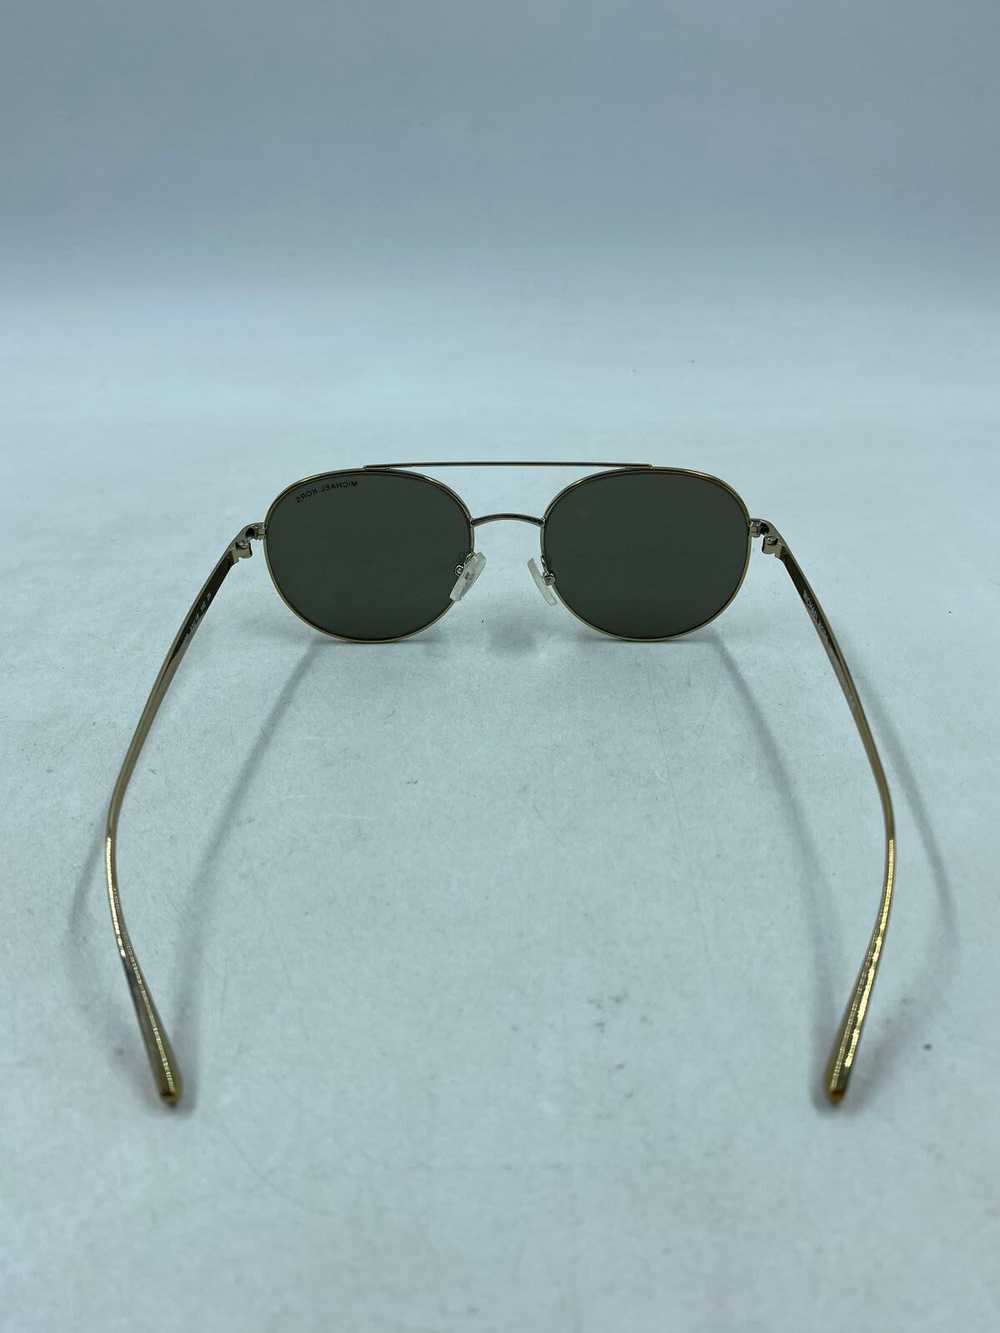 Michael Kors Gold Sunglasses - Size One Size - image 3